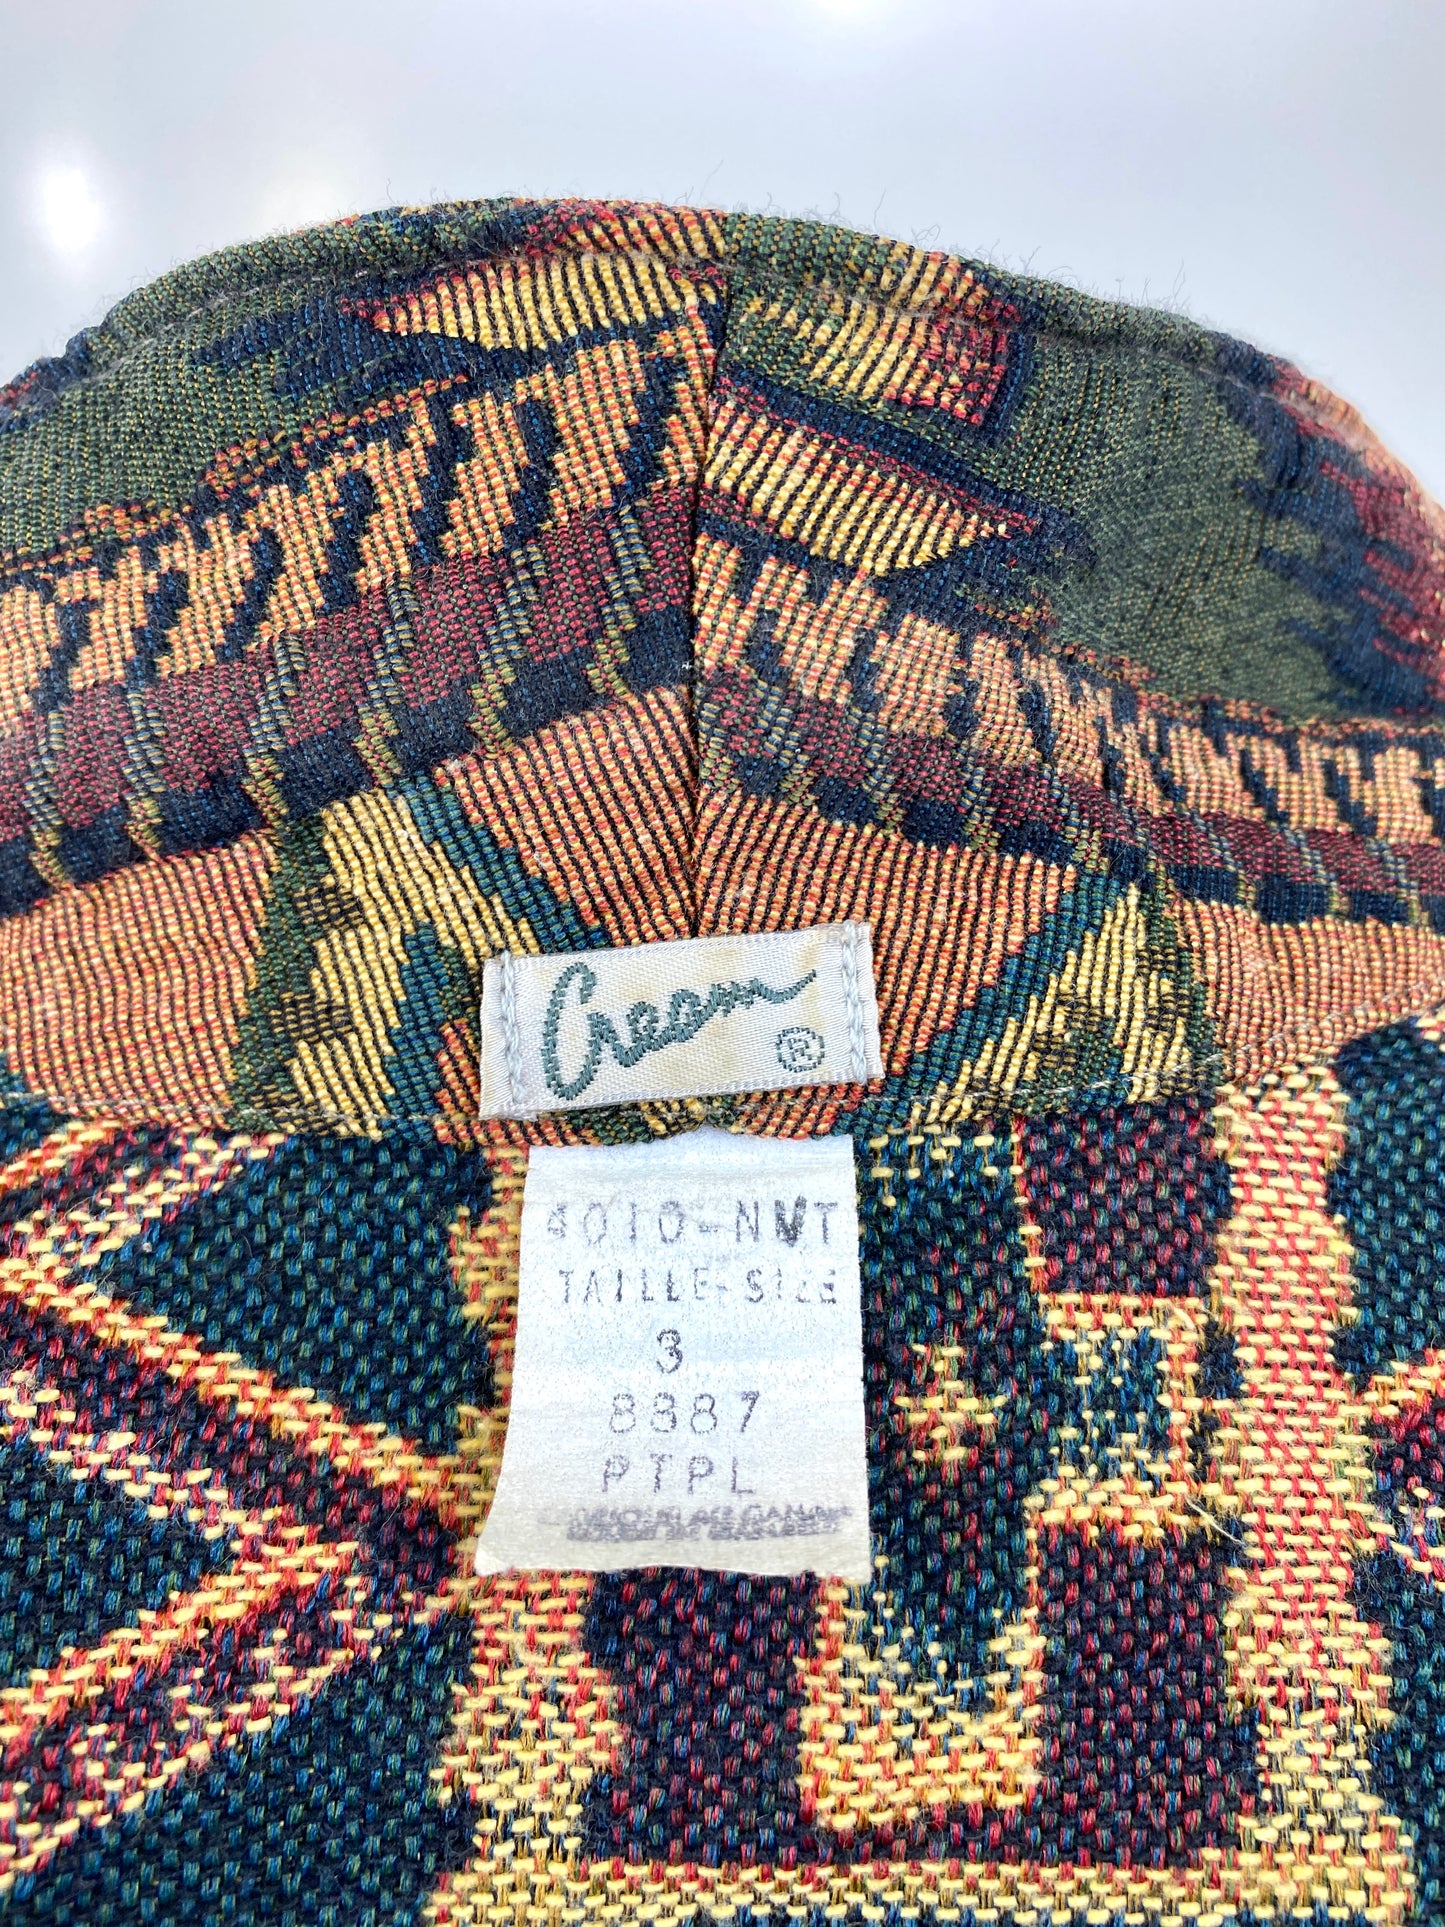 Men's Green Navajo Pattern Fashion Blazer, Upholstery Jacket, Emanuel Ravelli, C44